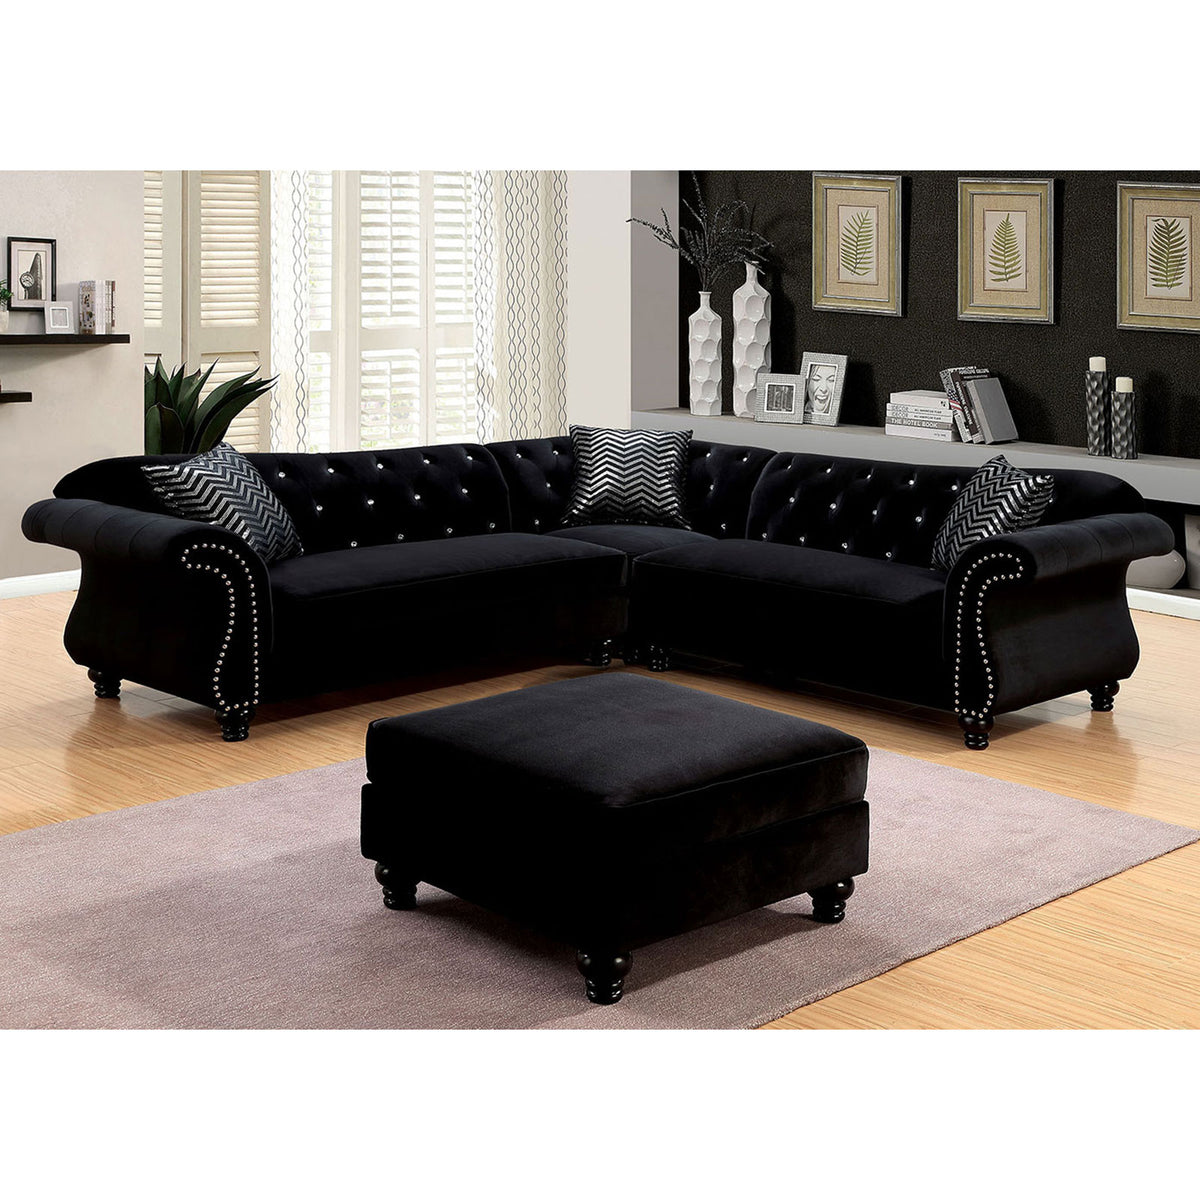 JOLANDA II Black Sectional, Black JOLANDA II Black Sectional, Black Half Price Furniture